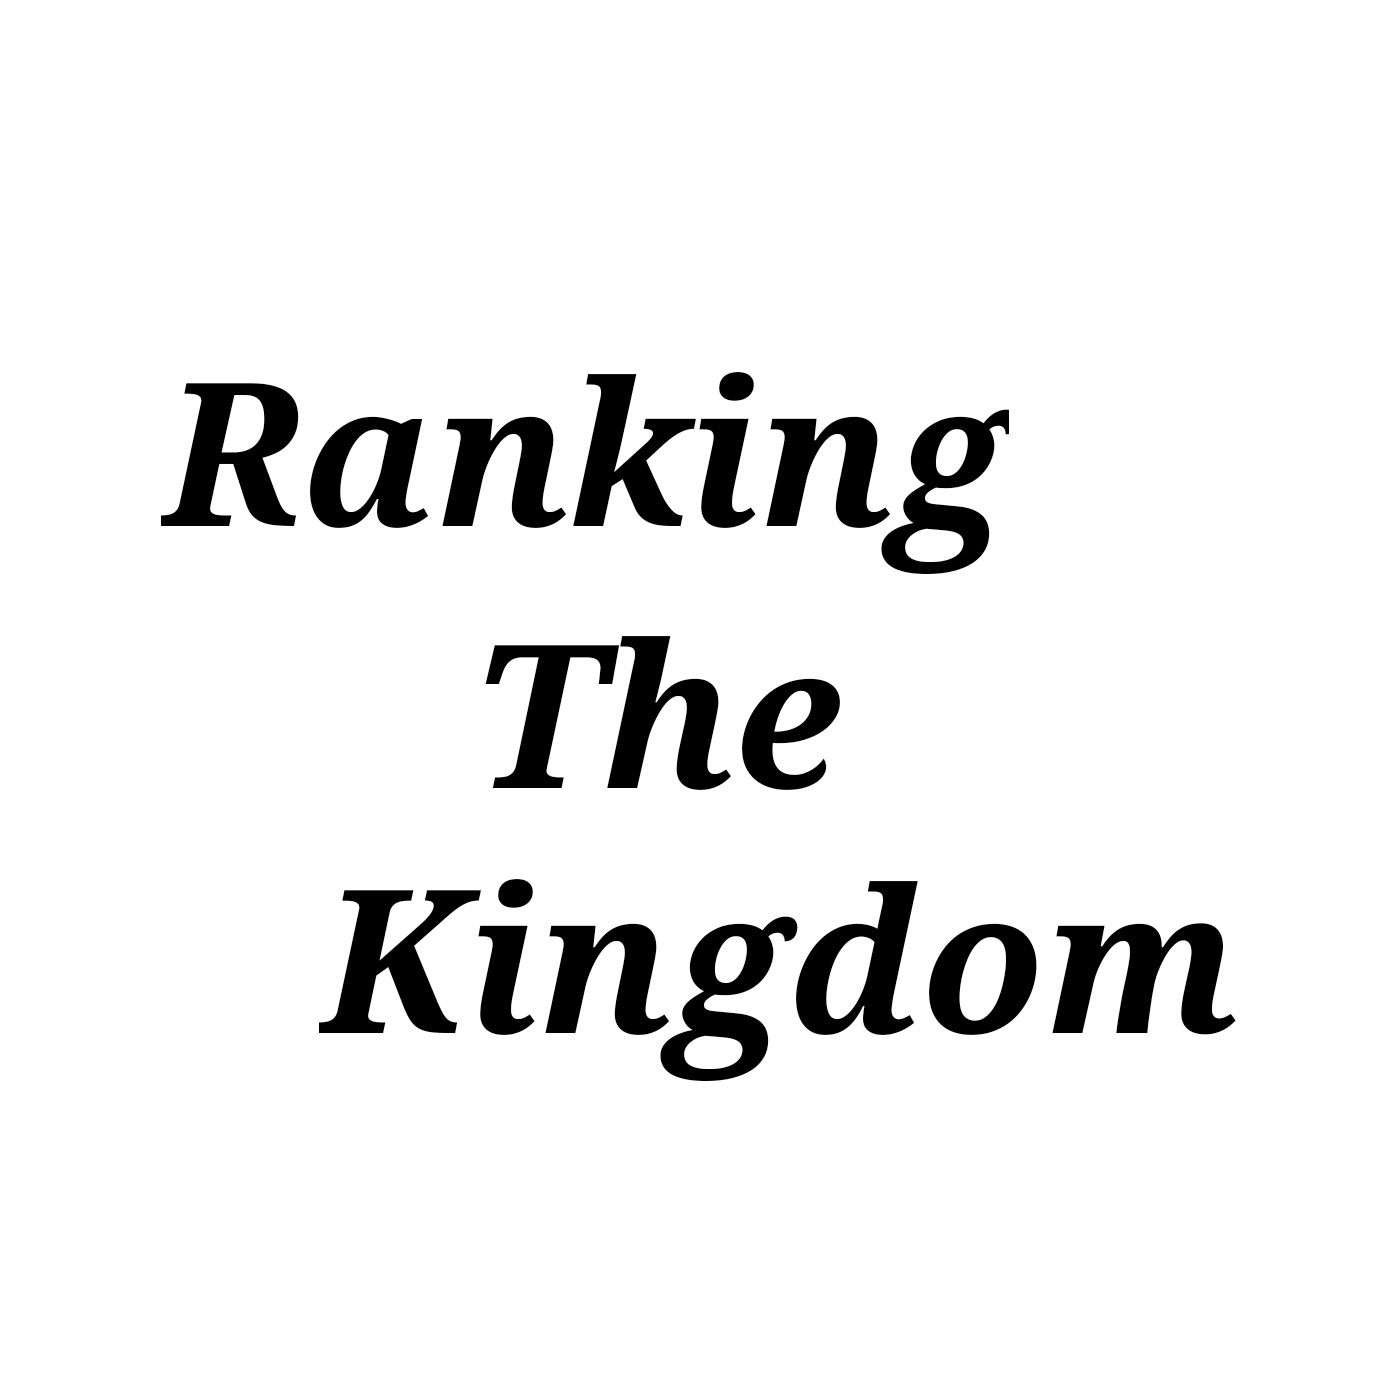 Ranking The Kingdom